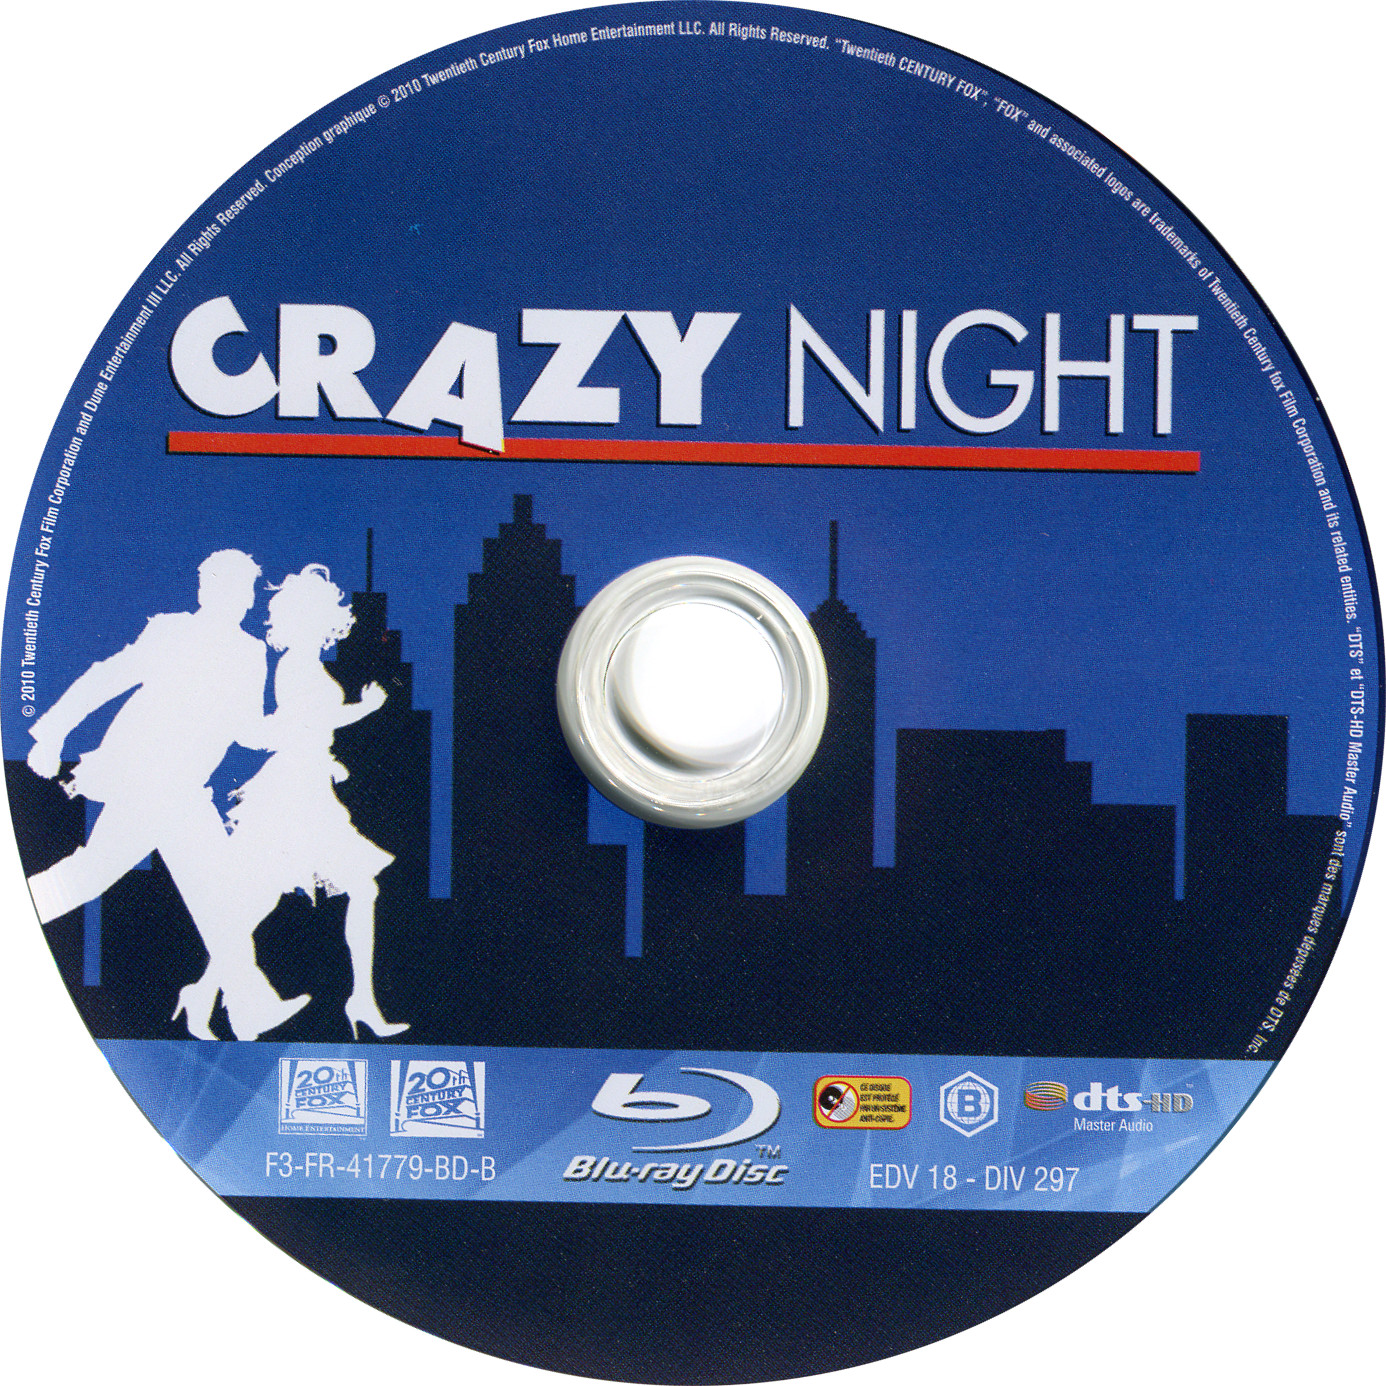 Crazy night (BLU-RAY)